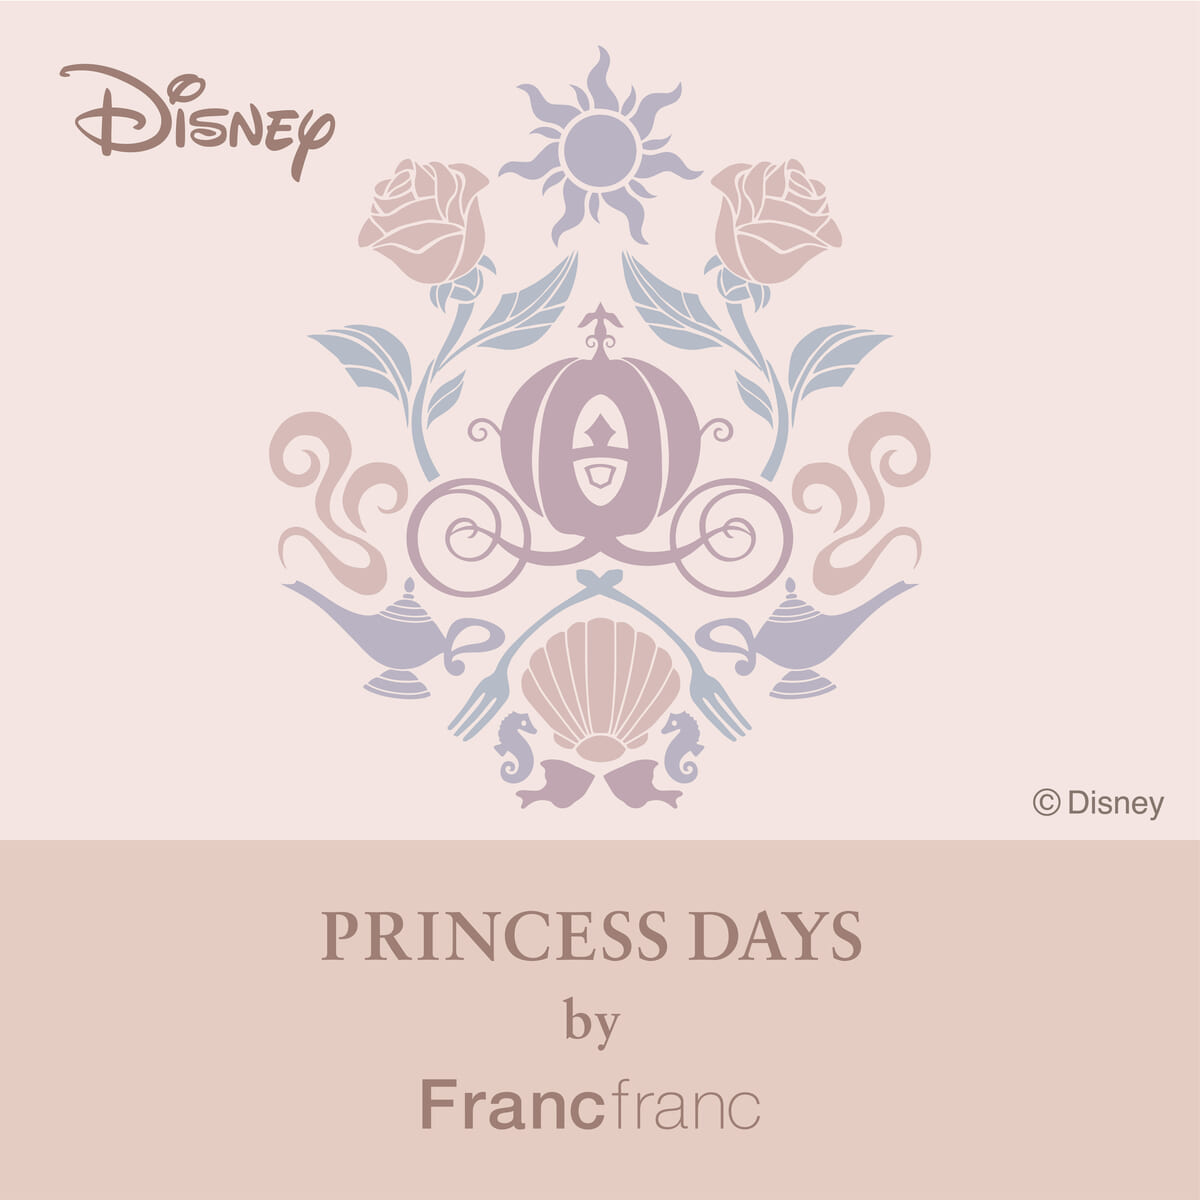 「PRINCESS DAYS by Francfranc」